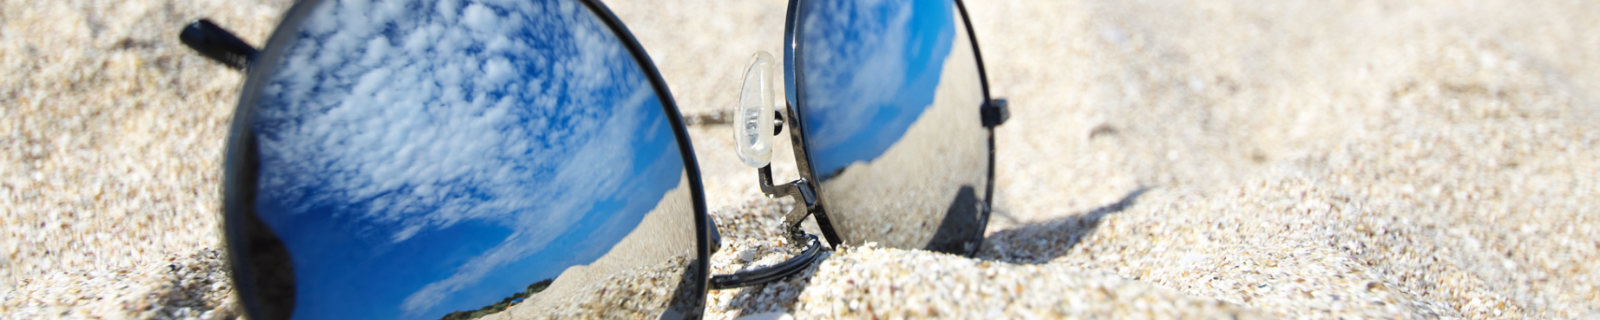 Mirrored sunglasses on beach